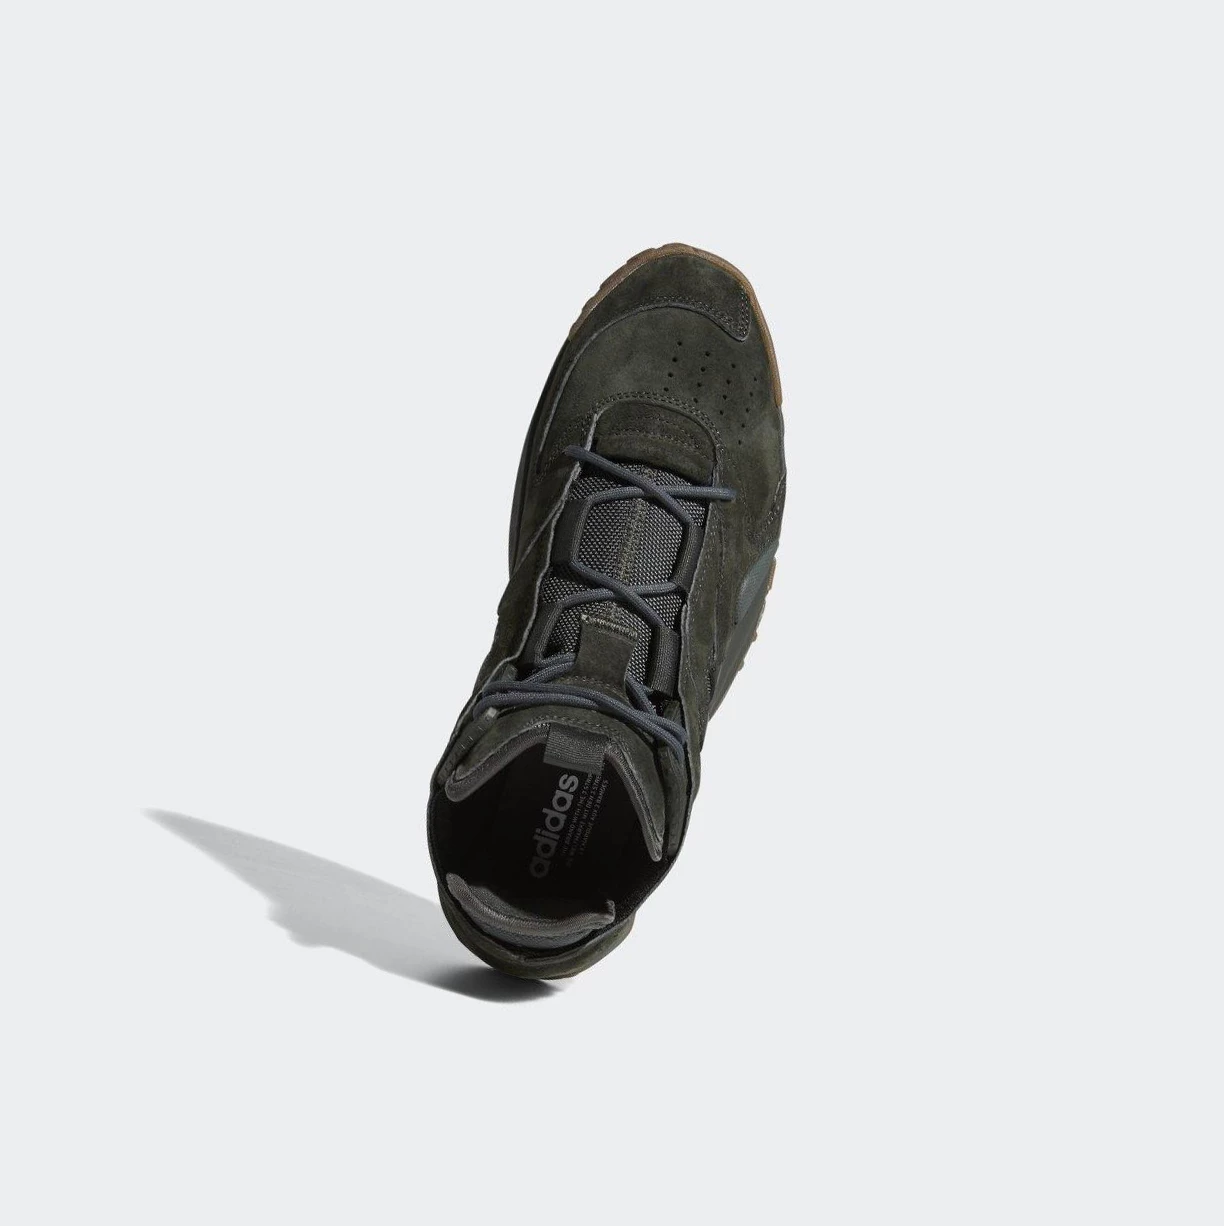 Originálne Topánky Adidas Streetball Panske Zelene | 201SKUNRWMG